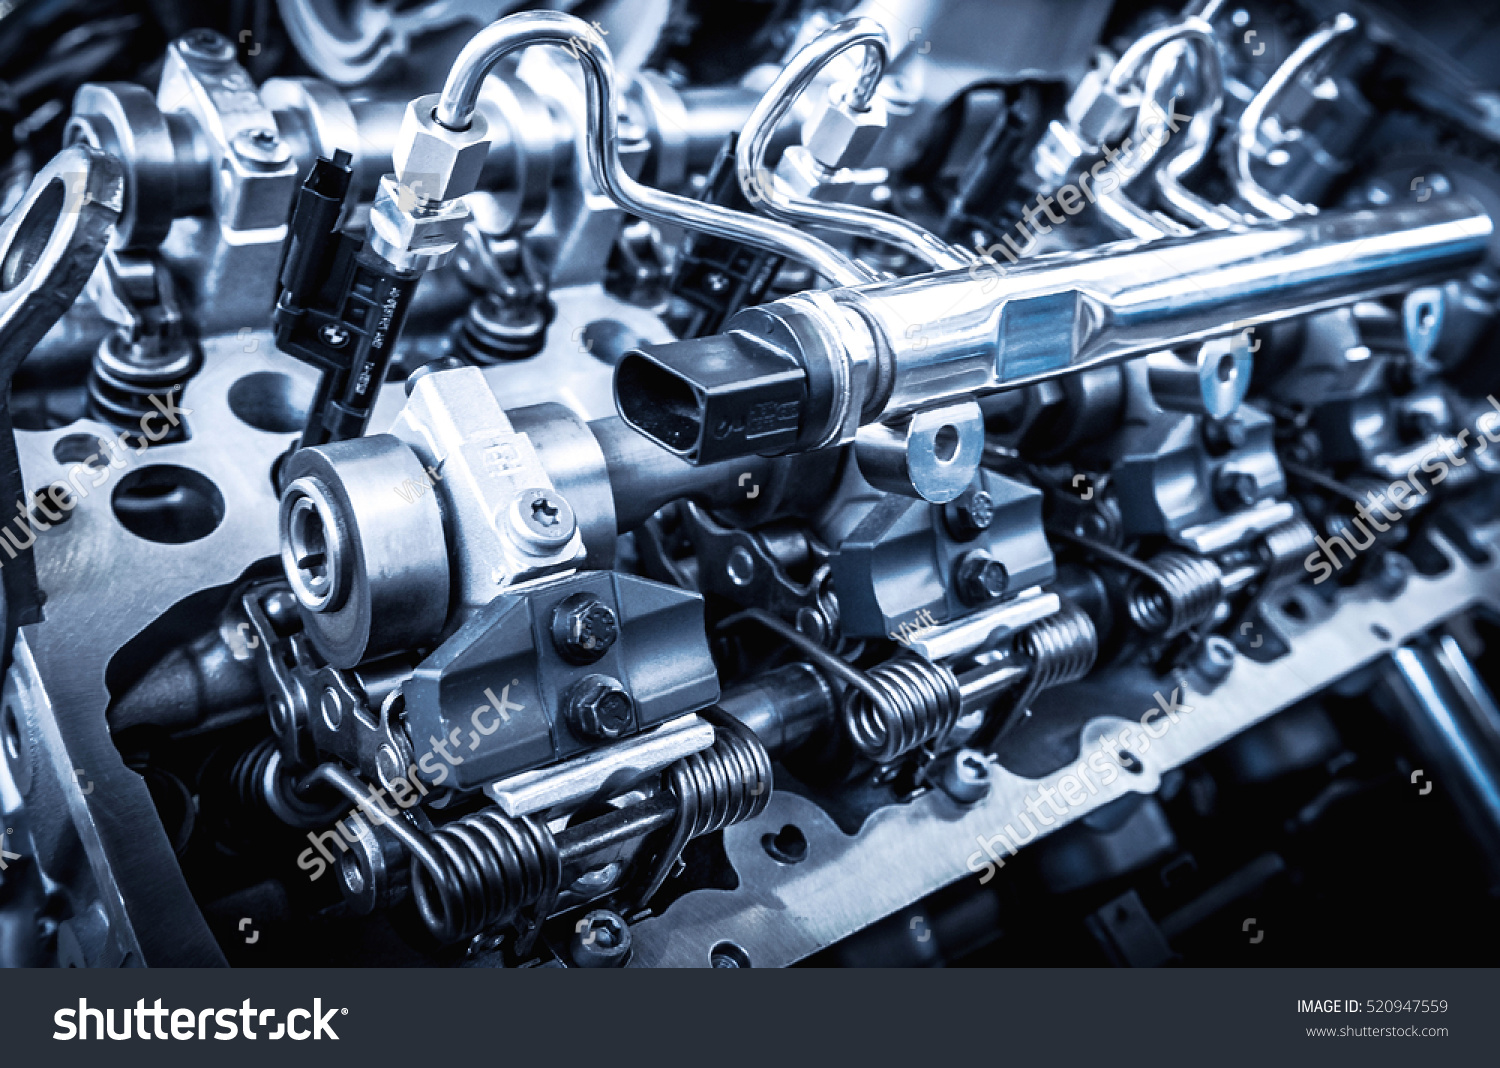 The powerful engine of a car. Internal design of engine. Car engine part. Modern powerful car engine. #520947559